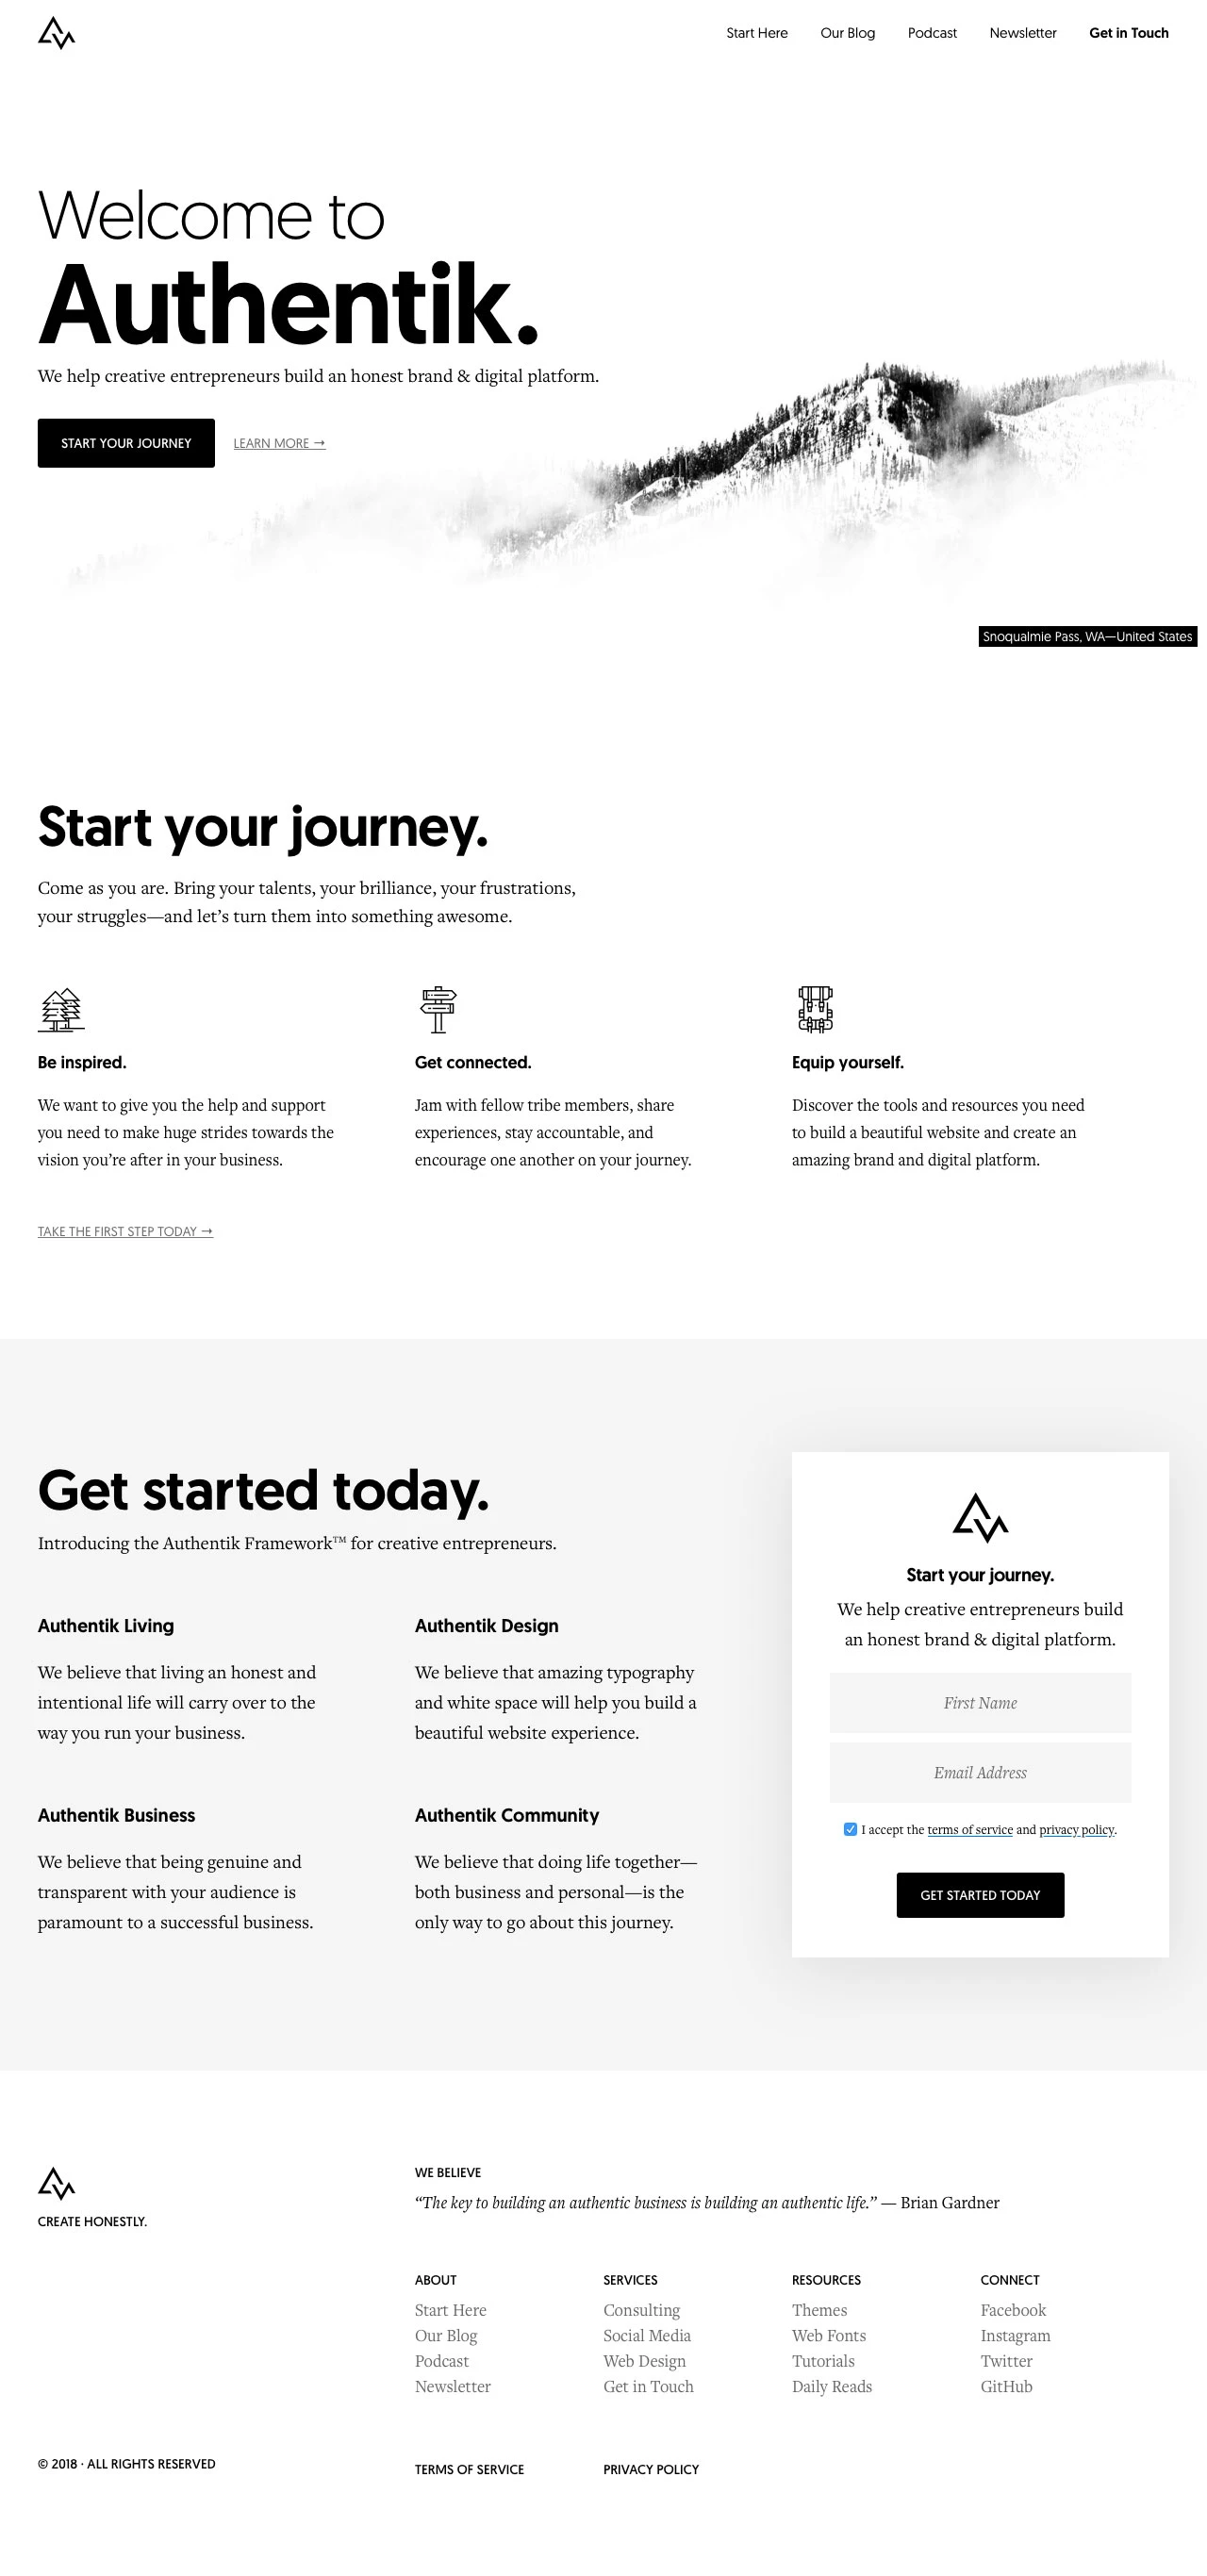 Authentik Landing Page Example: We help creative entrepreneurs build an honest brand & digital platform.